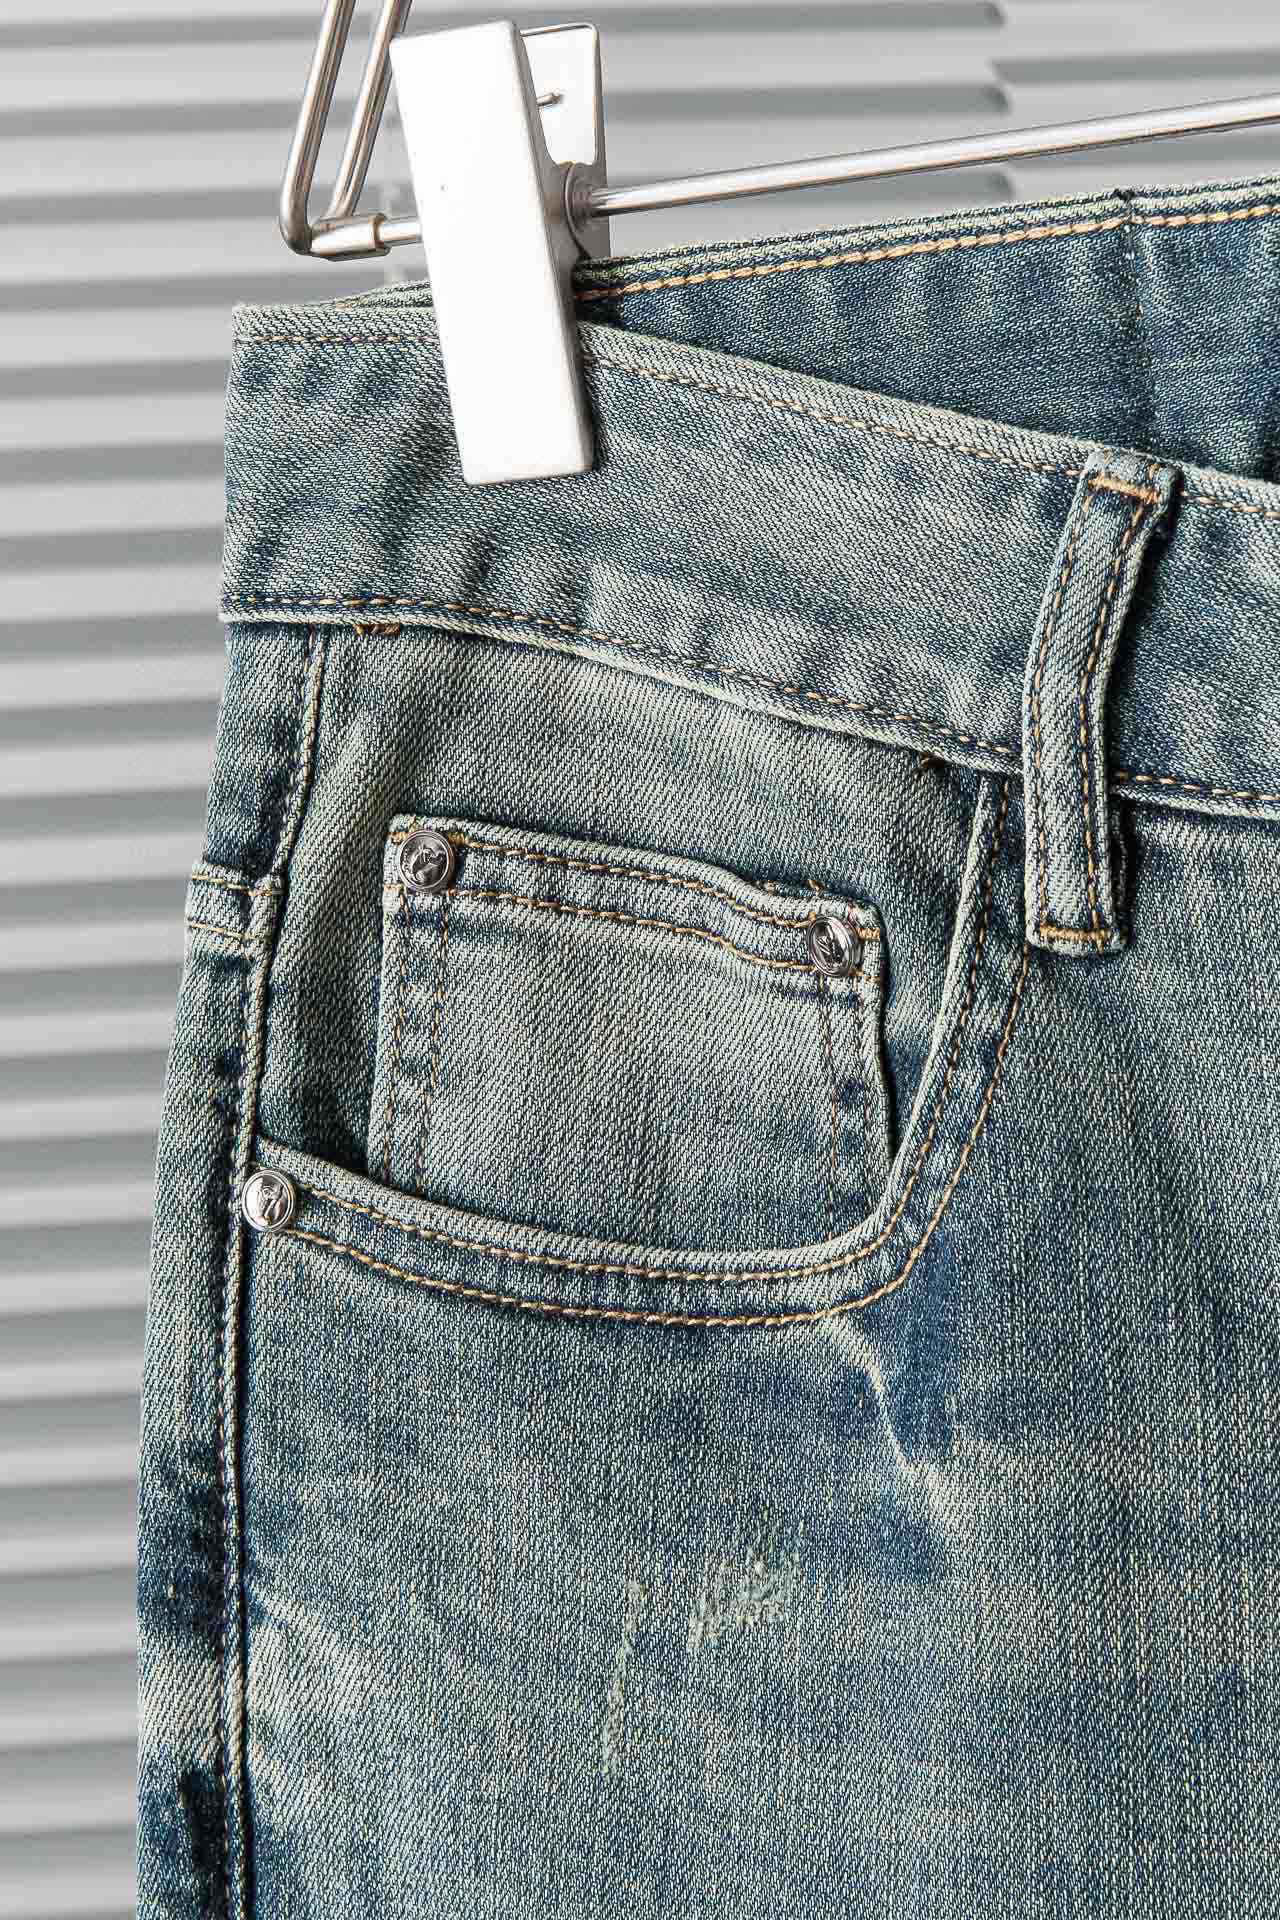 New#ThomBrowne男士时尚直筒牛仔长裤！贸易公司渠道稀出领先官网发售！最新裤装单品奉献所有品质